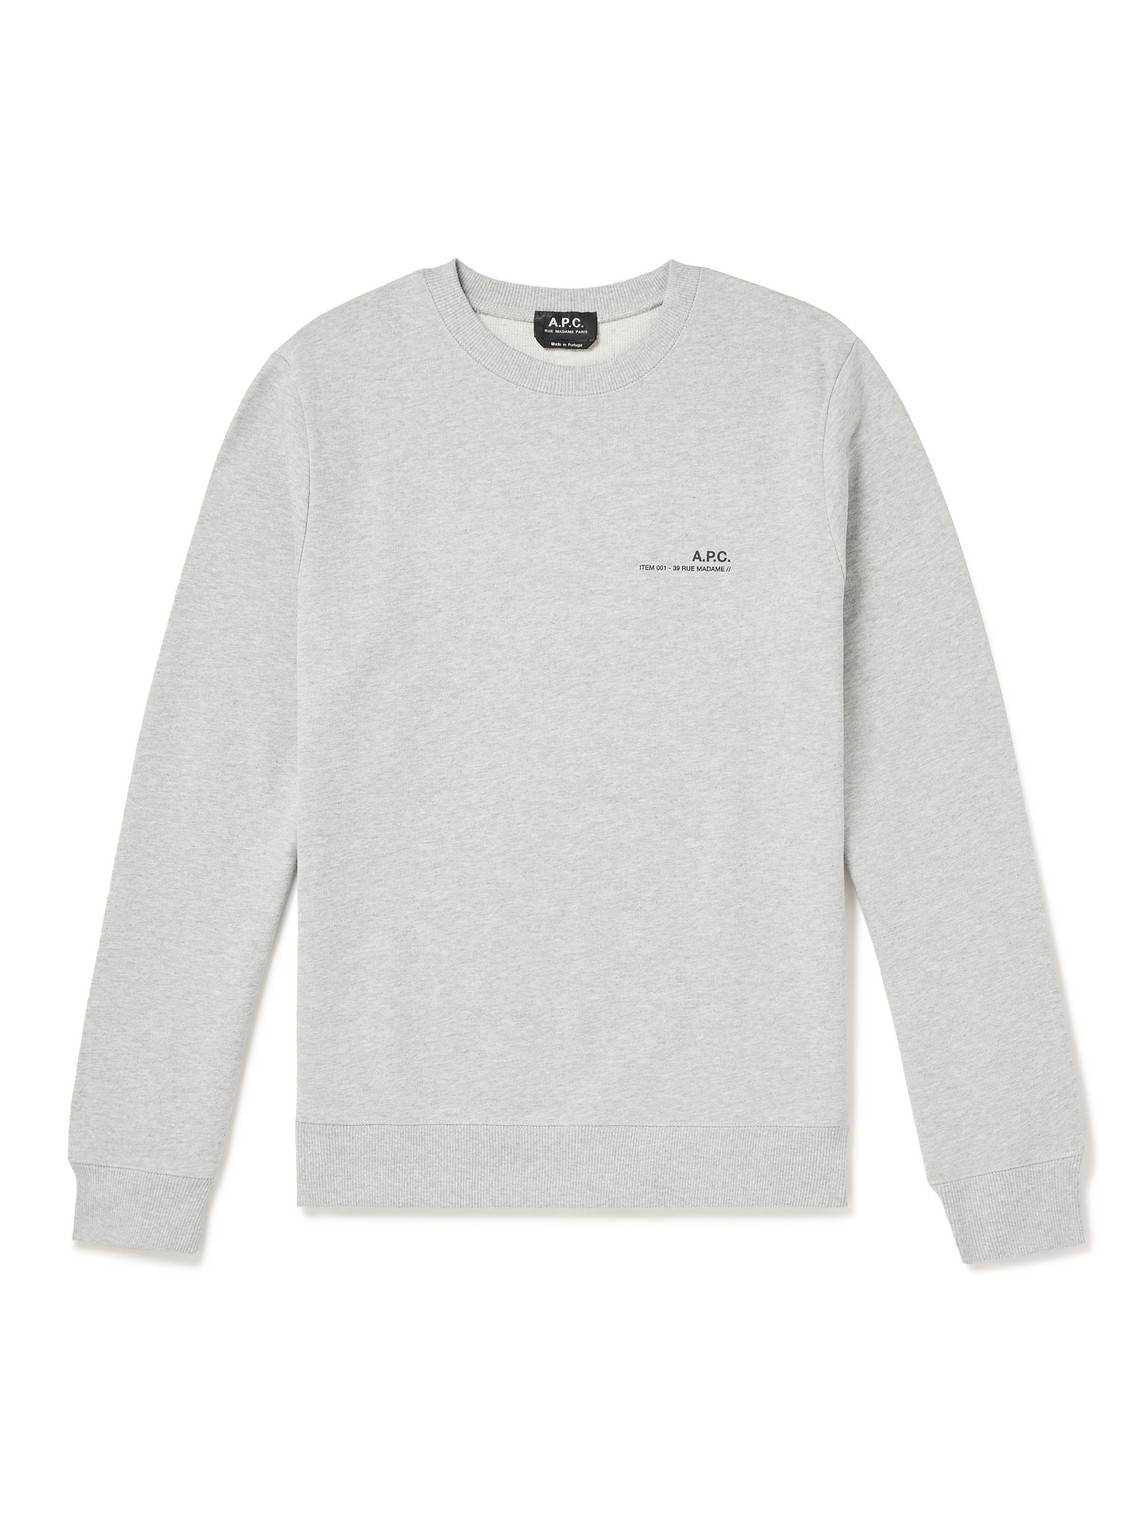 A.P.C. - Item Logo-Print Cotton-Jersey Sweatshirt - Men - Gray - S von A.P.C.